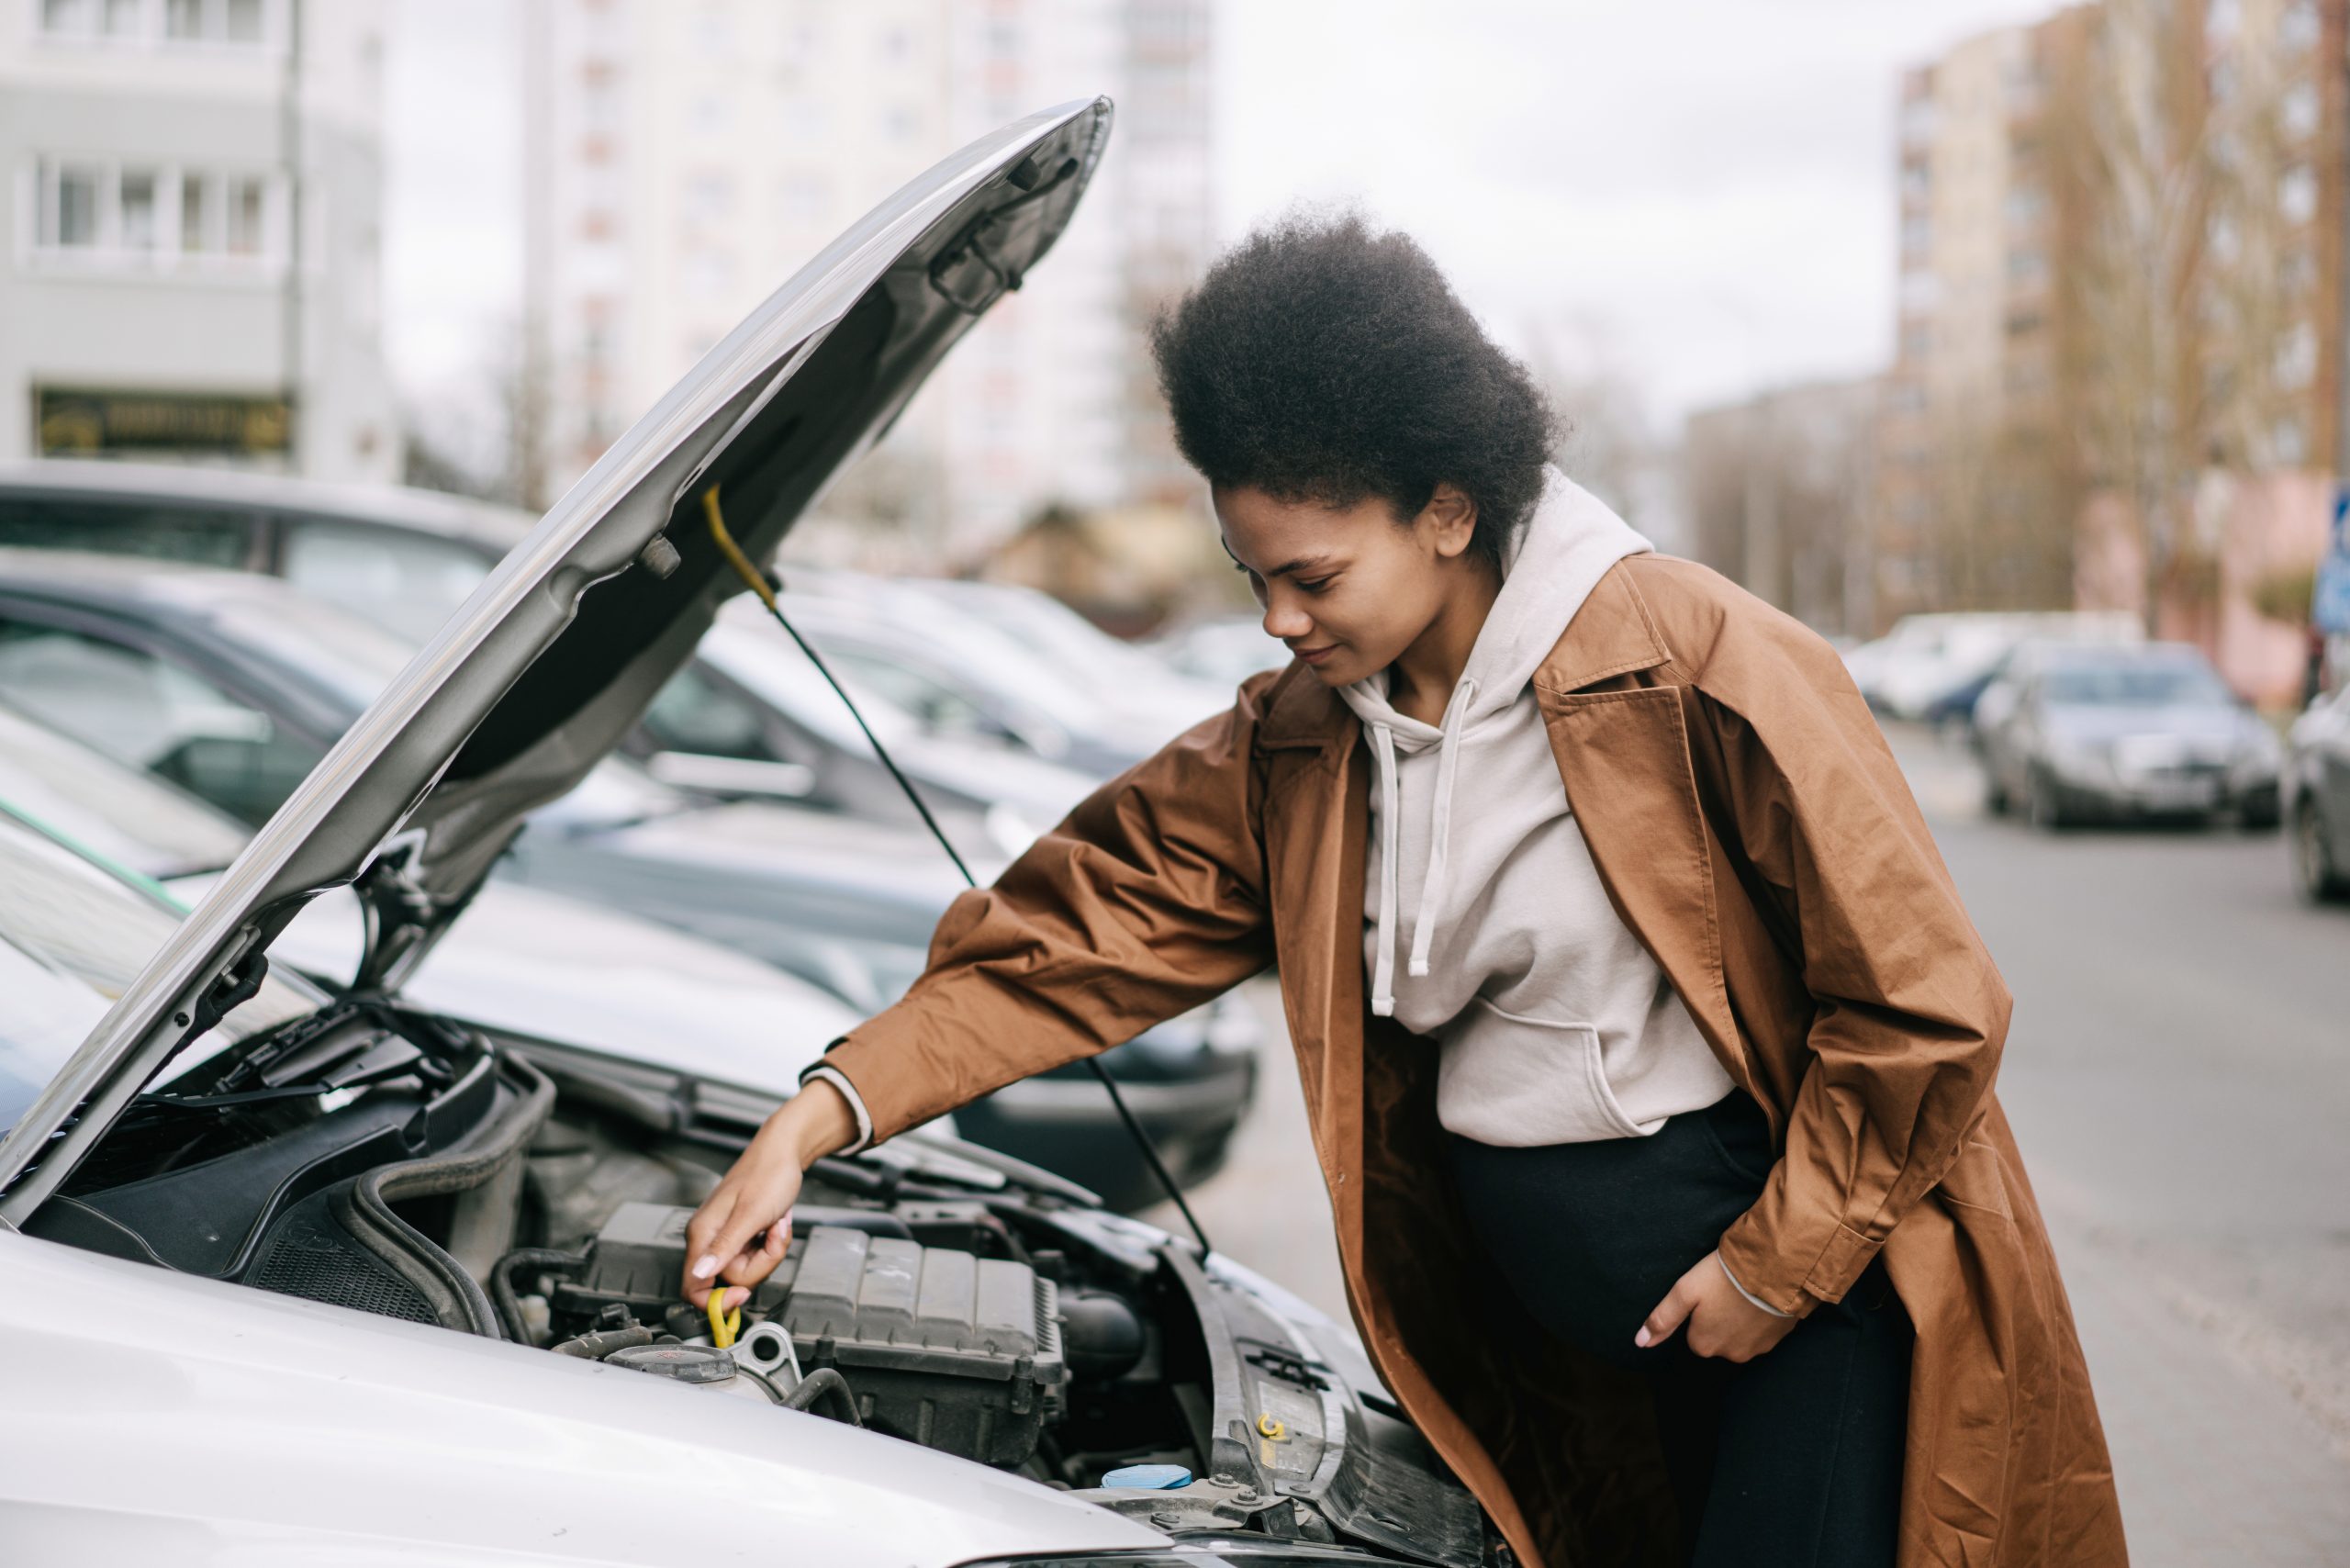 A pregnant woman fixing a car engine